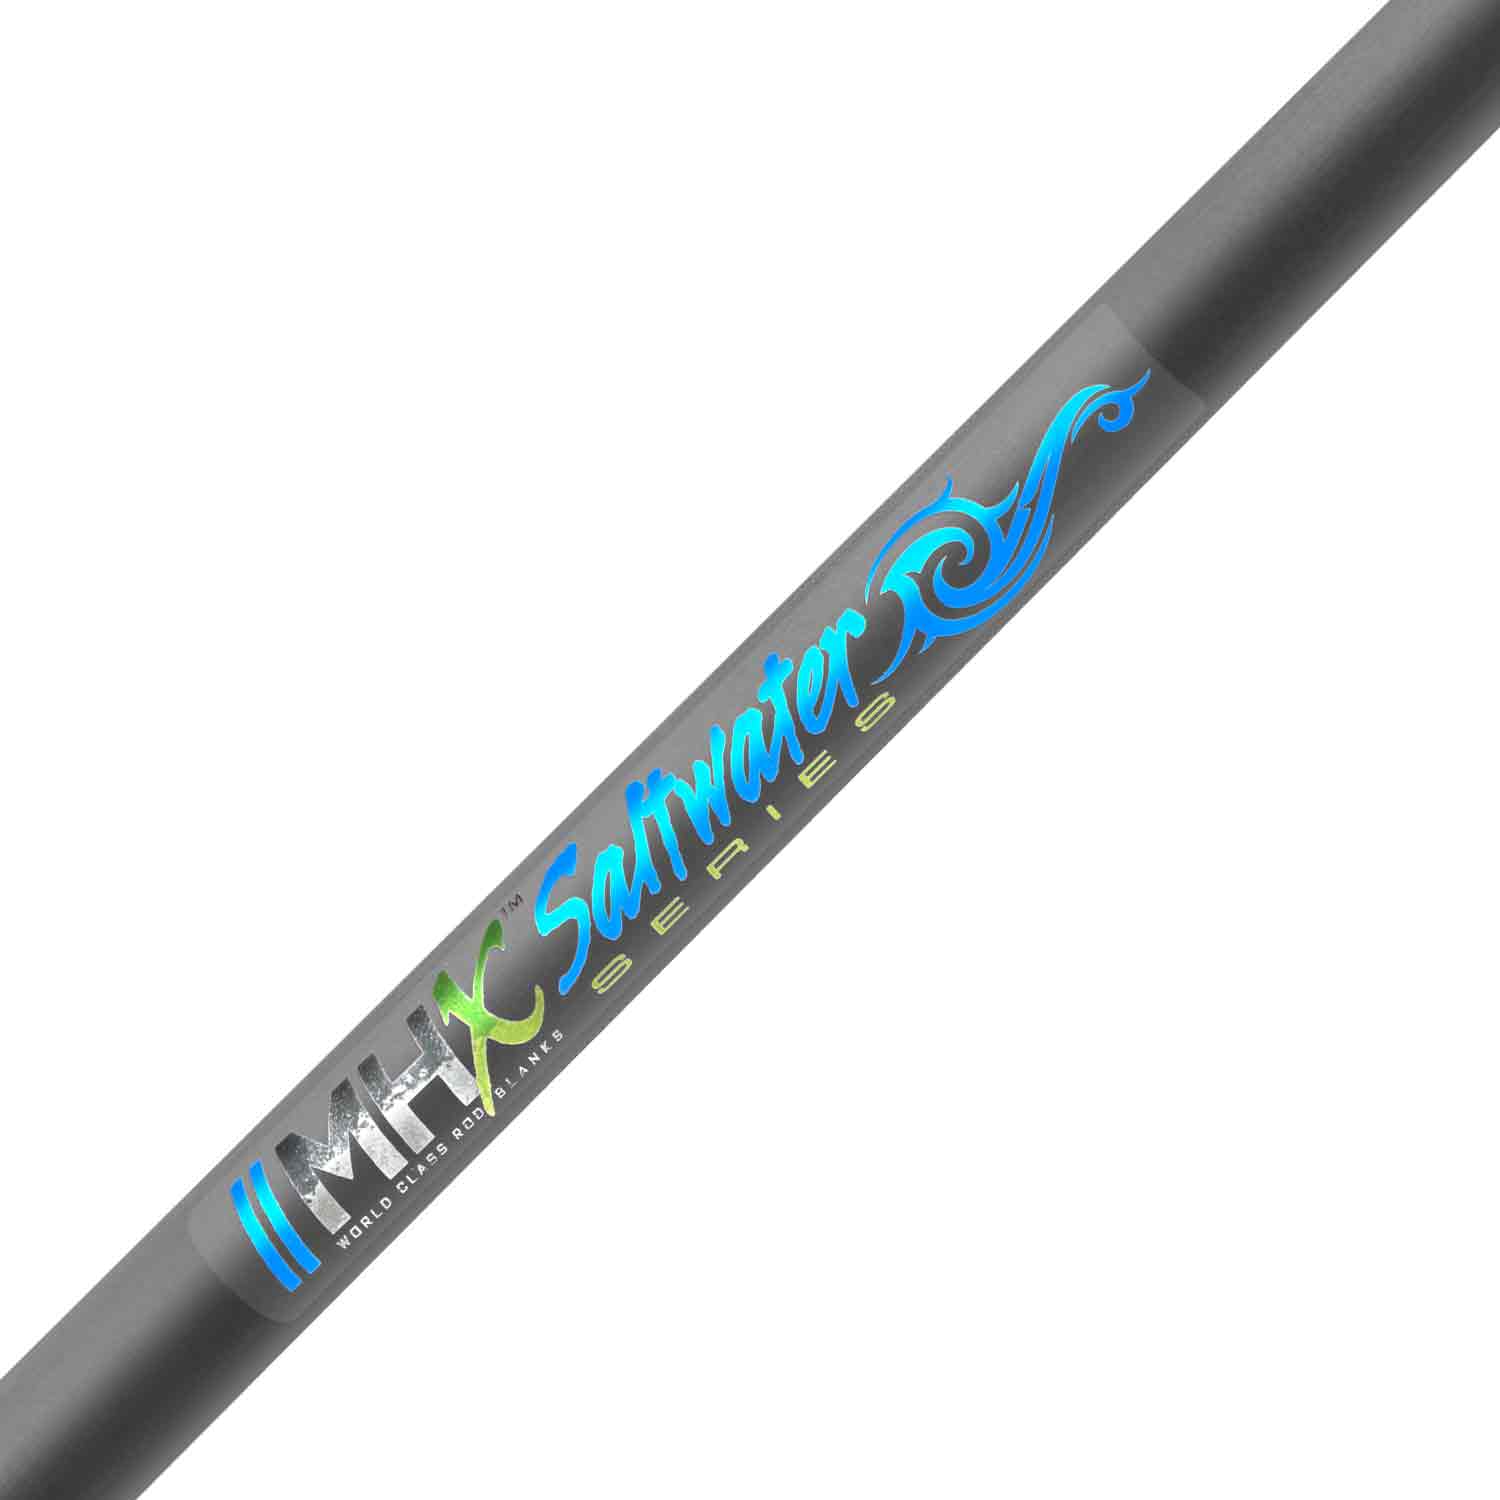 MHX 8'0" Medium Composite Saltwater Rod Blank - GFC96M